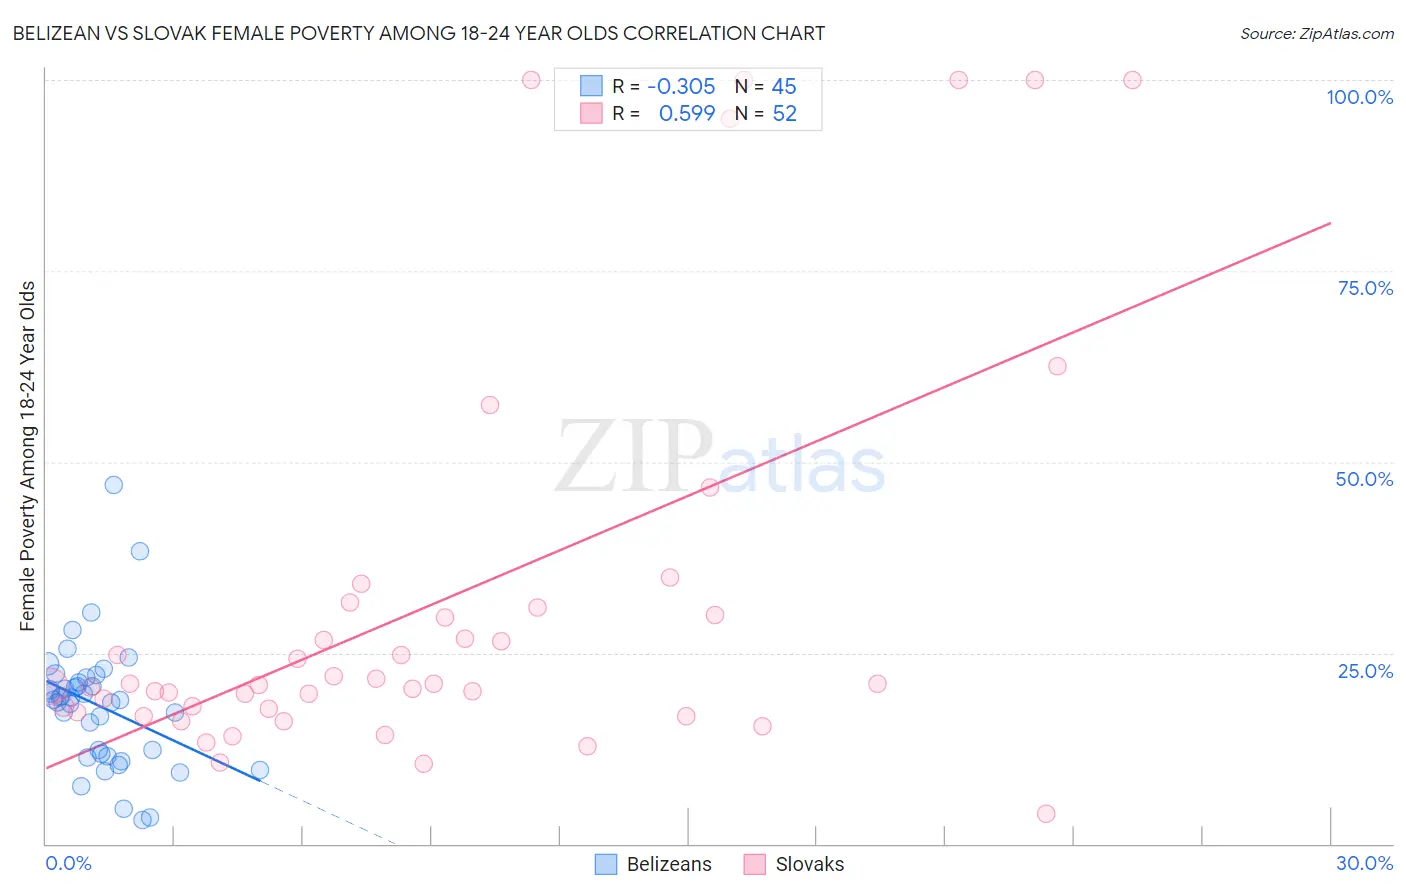 Belizean vs Slovak Female Poverty Among 18-24 Year Olds